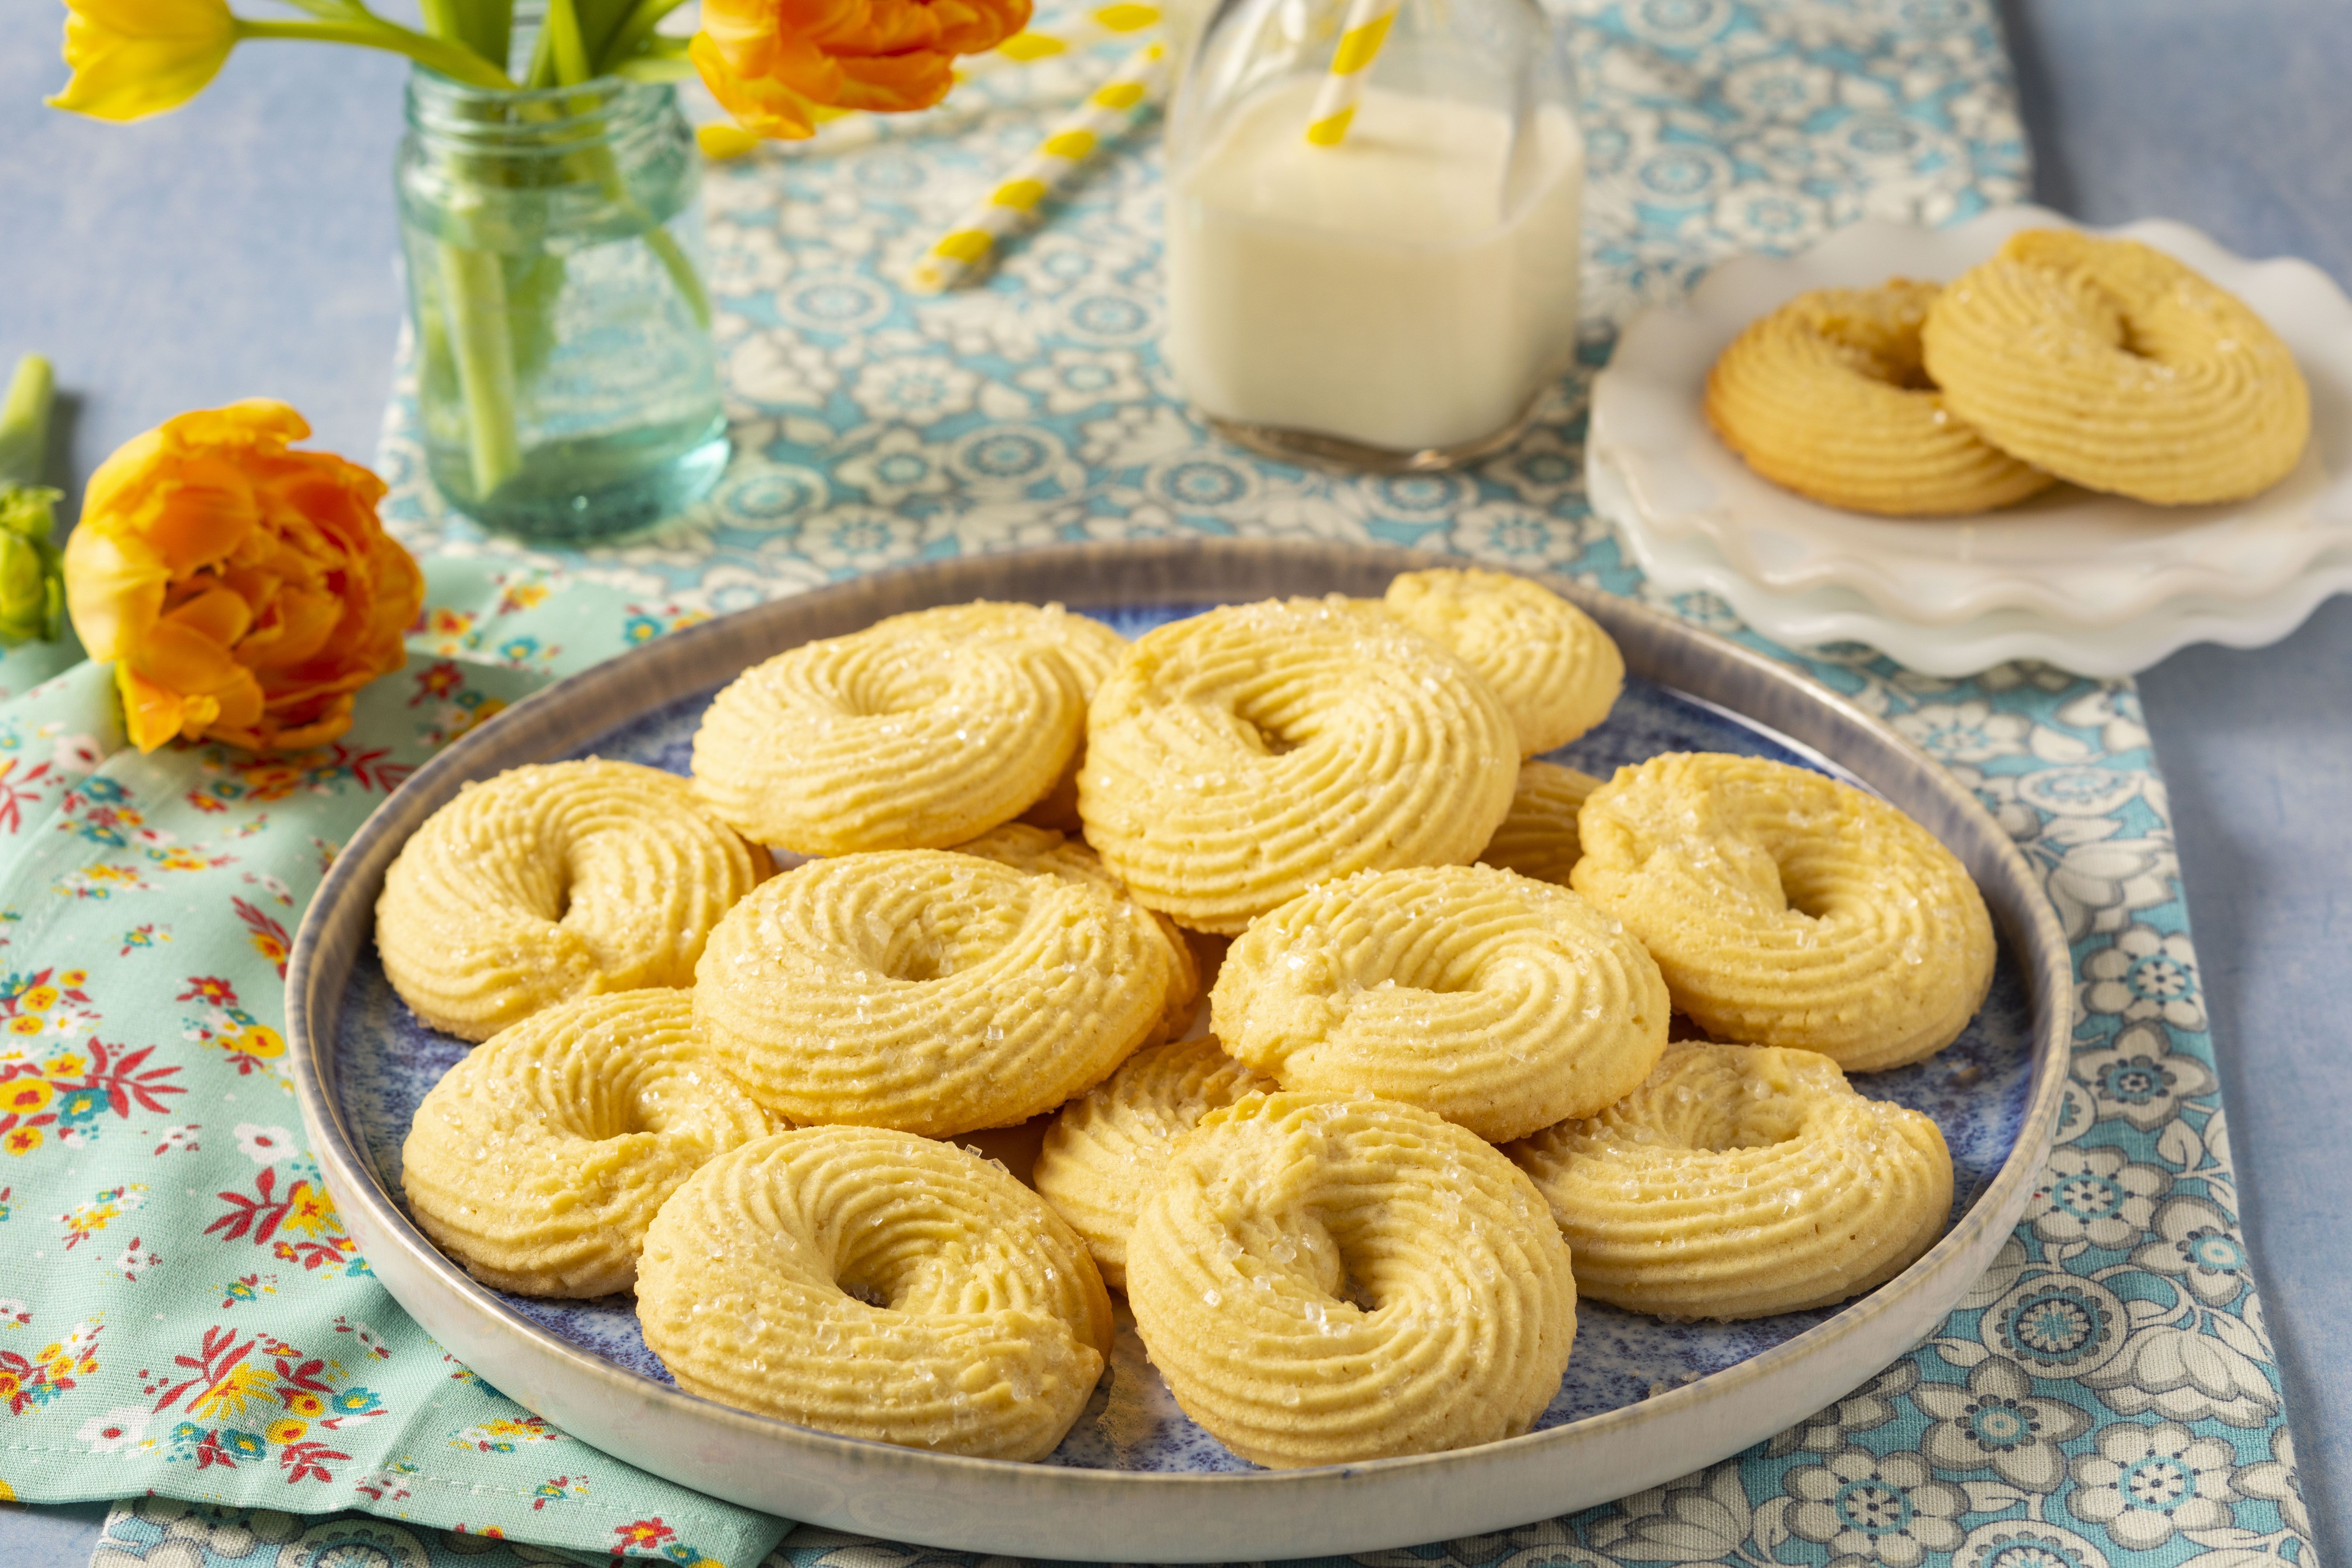 Danish Butter Cookies - Easy Cookie Recipes